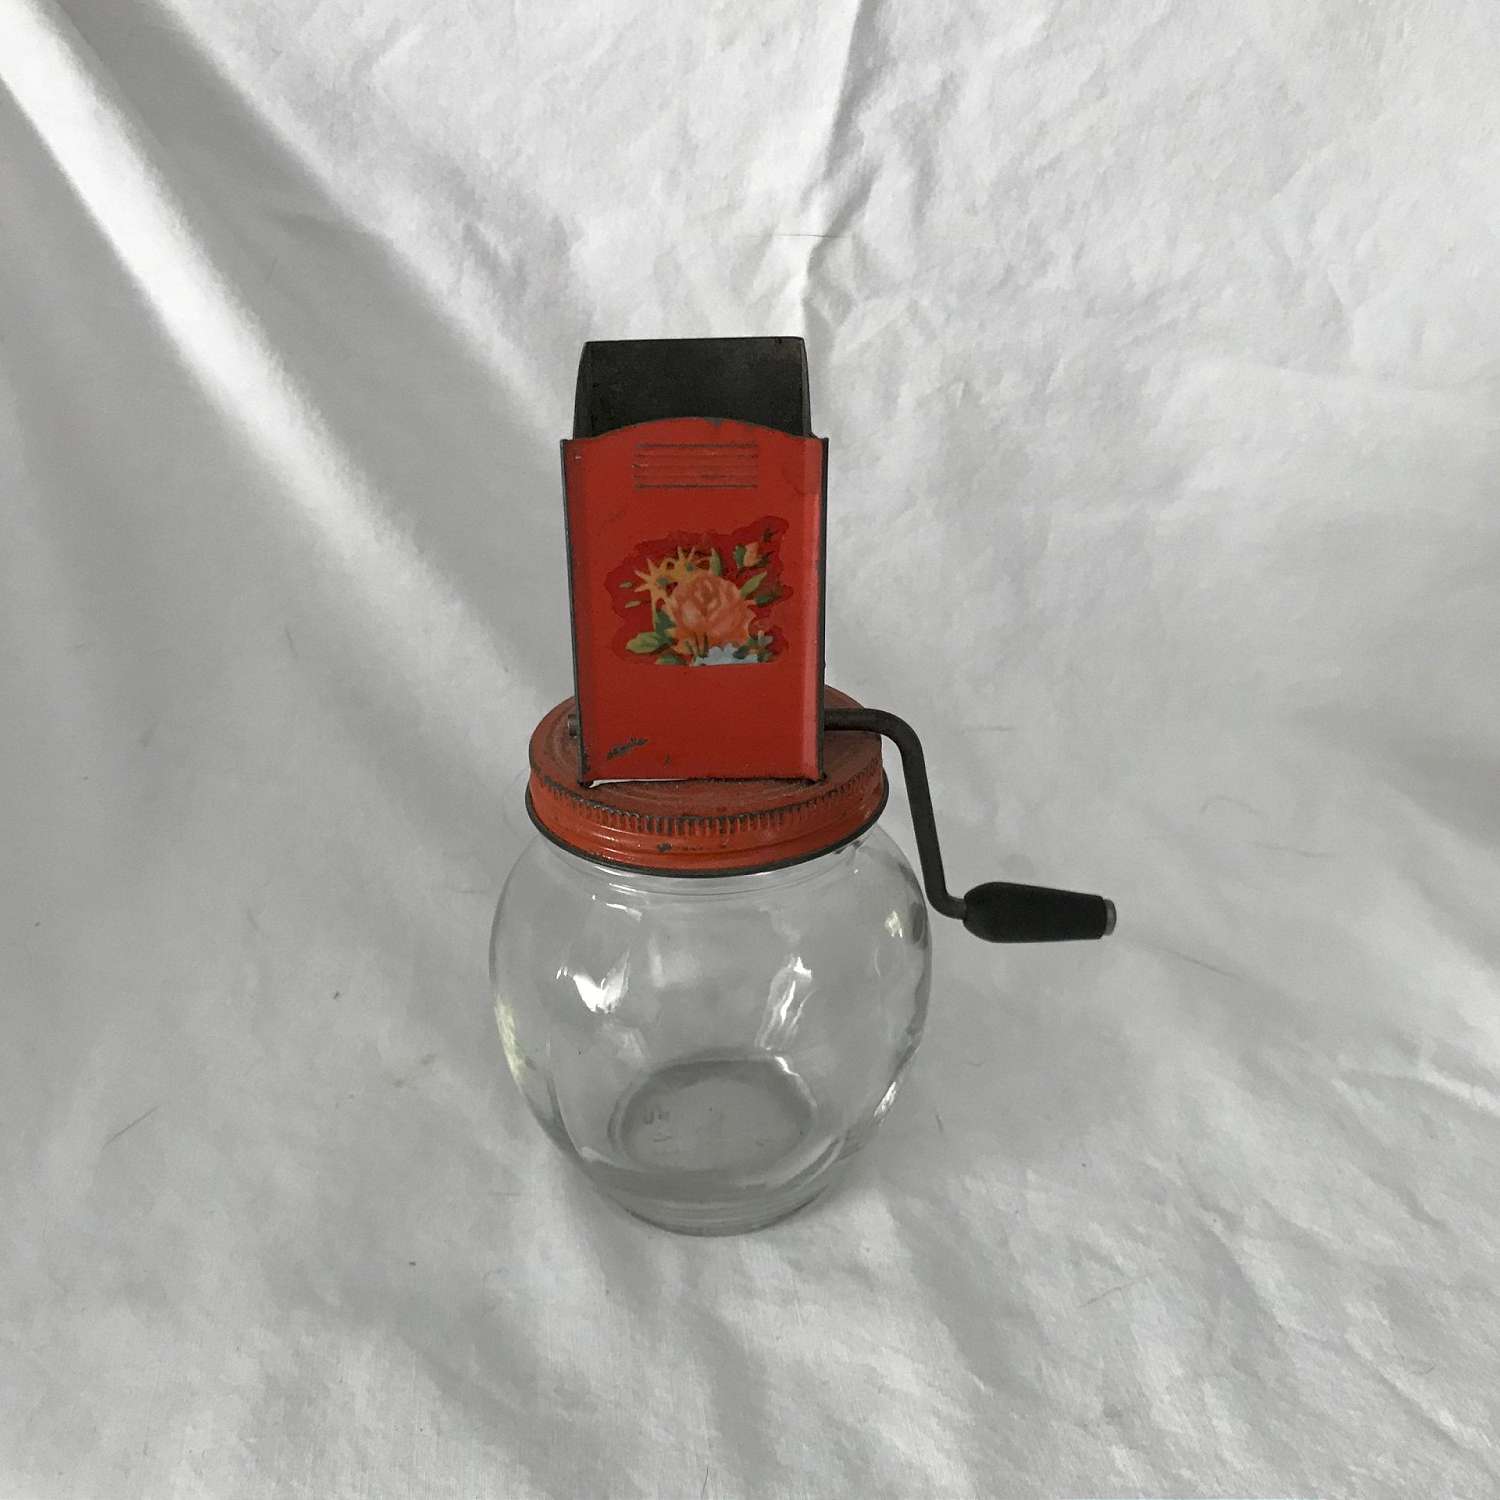 https://www.truevintageantiques.com/wp-content/uploads/2019/12/vintage-hazel-atlas-chopper-orange-flowers-black-wooden-handle-round-jar-base-nut-choper-1930-40s-farmhouse-cottage-5df2621f1-scaled.jpg